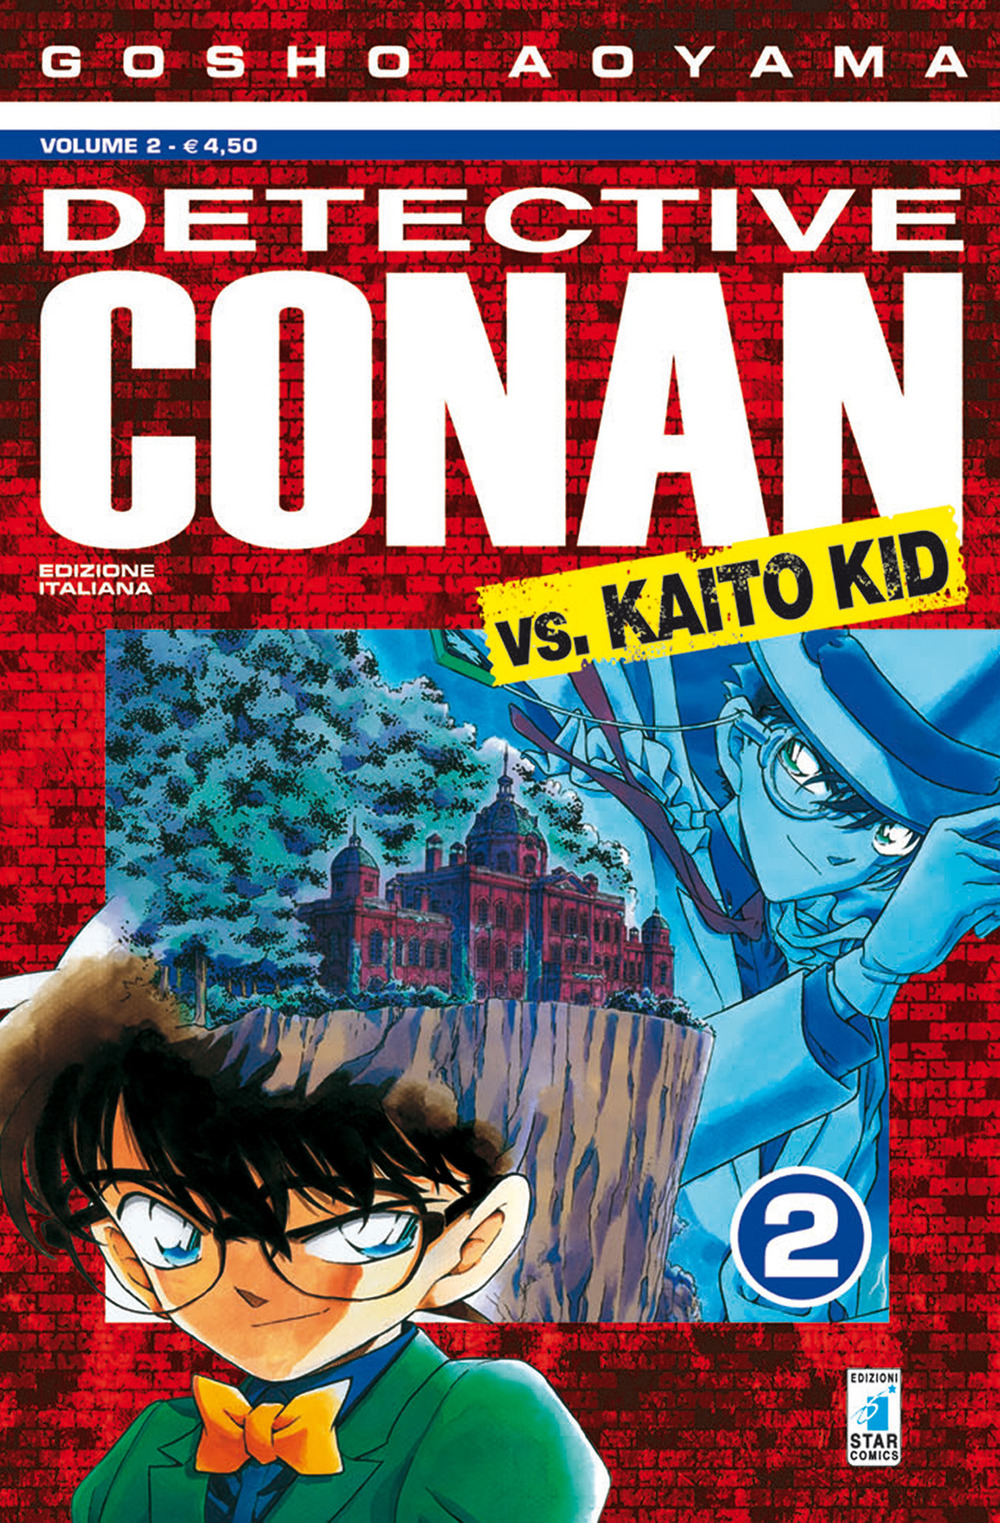 Detective Conan vs Kaito kid. Vol. 2